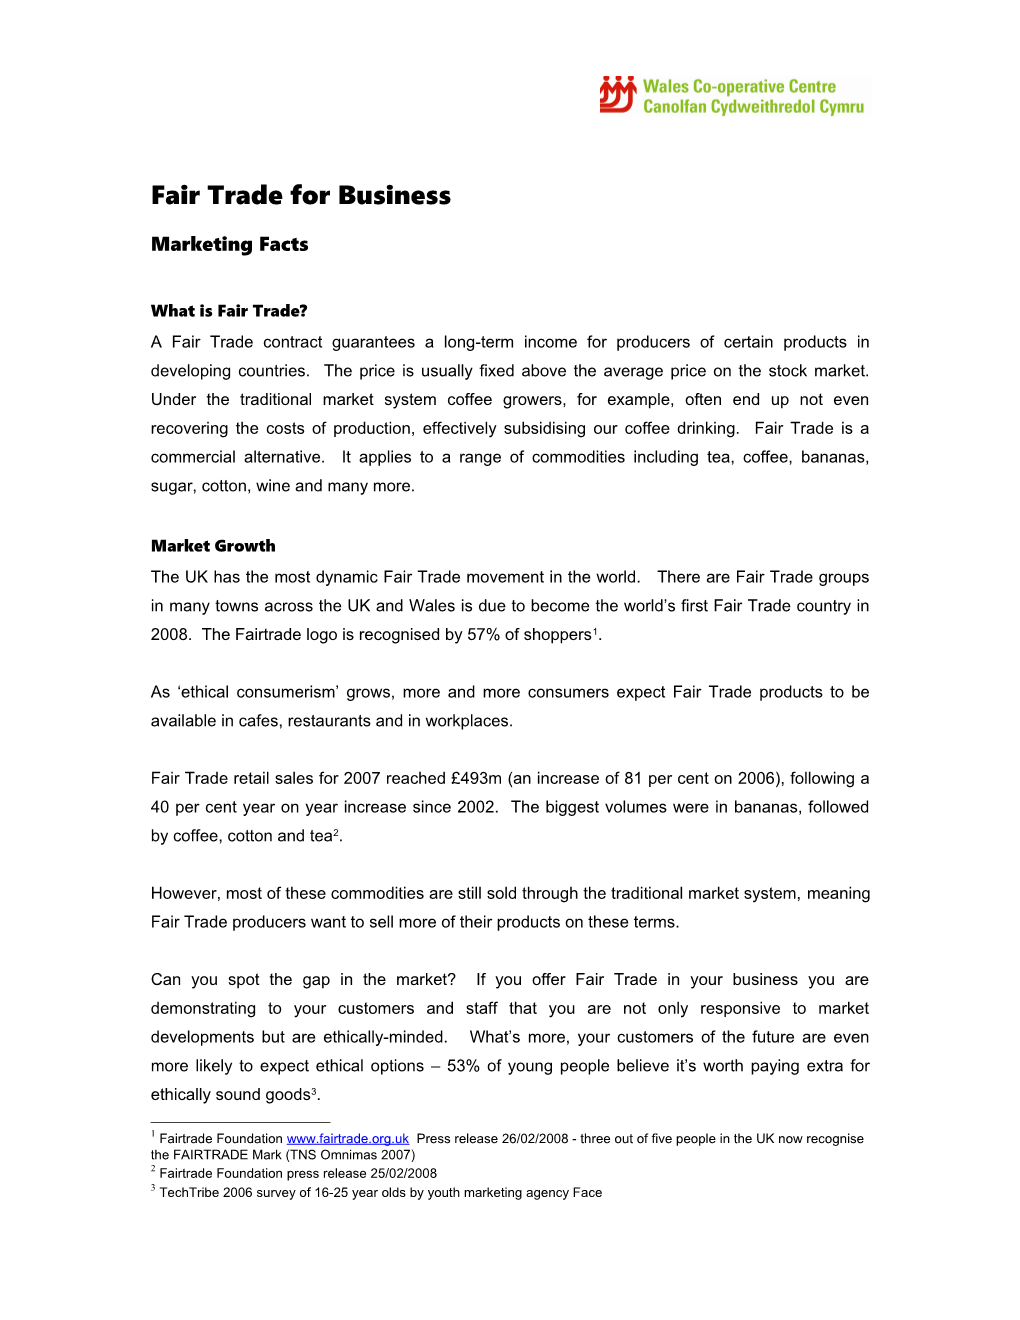 Fair Trade for Businesses